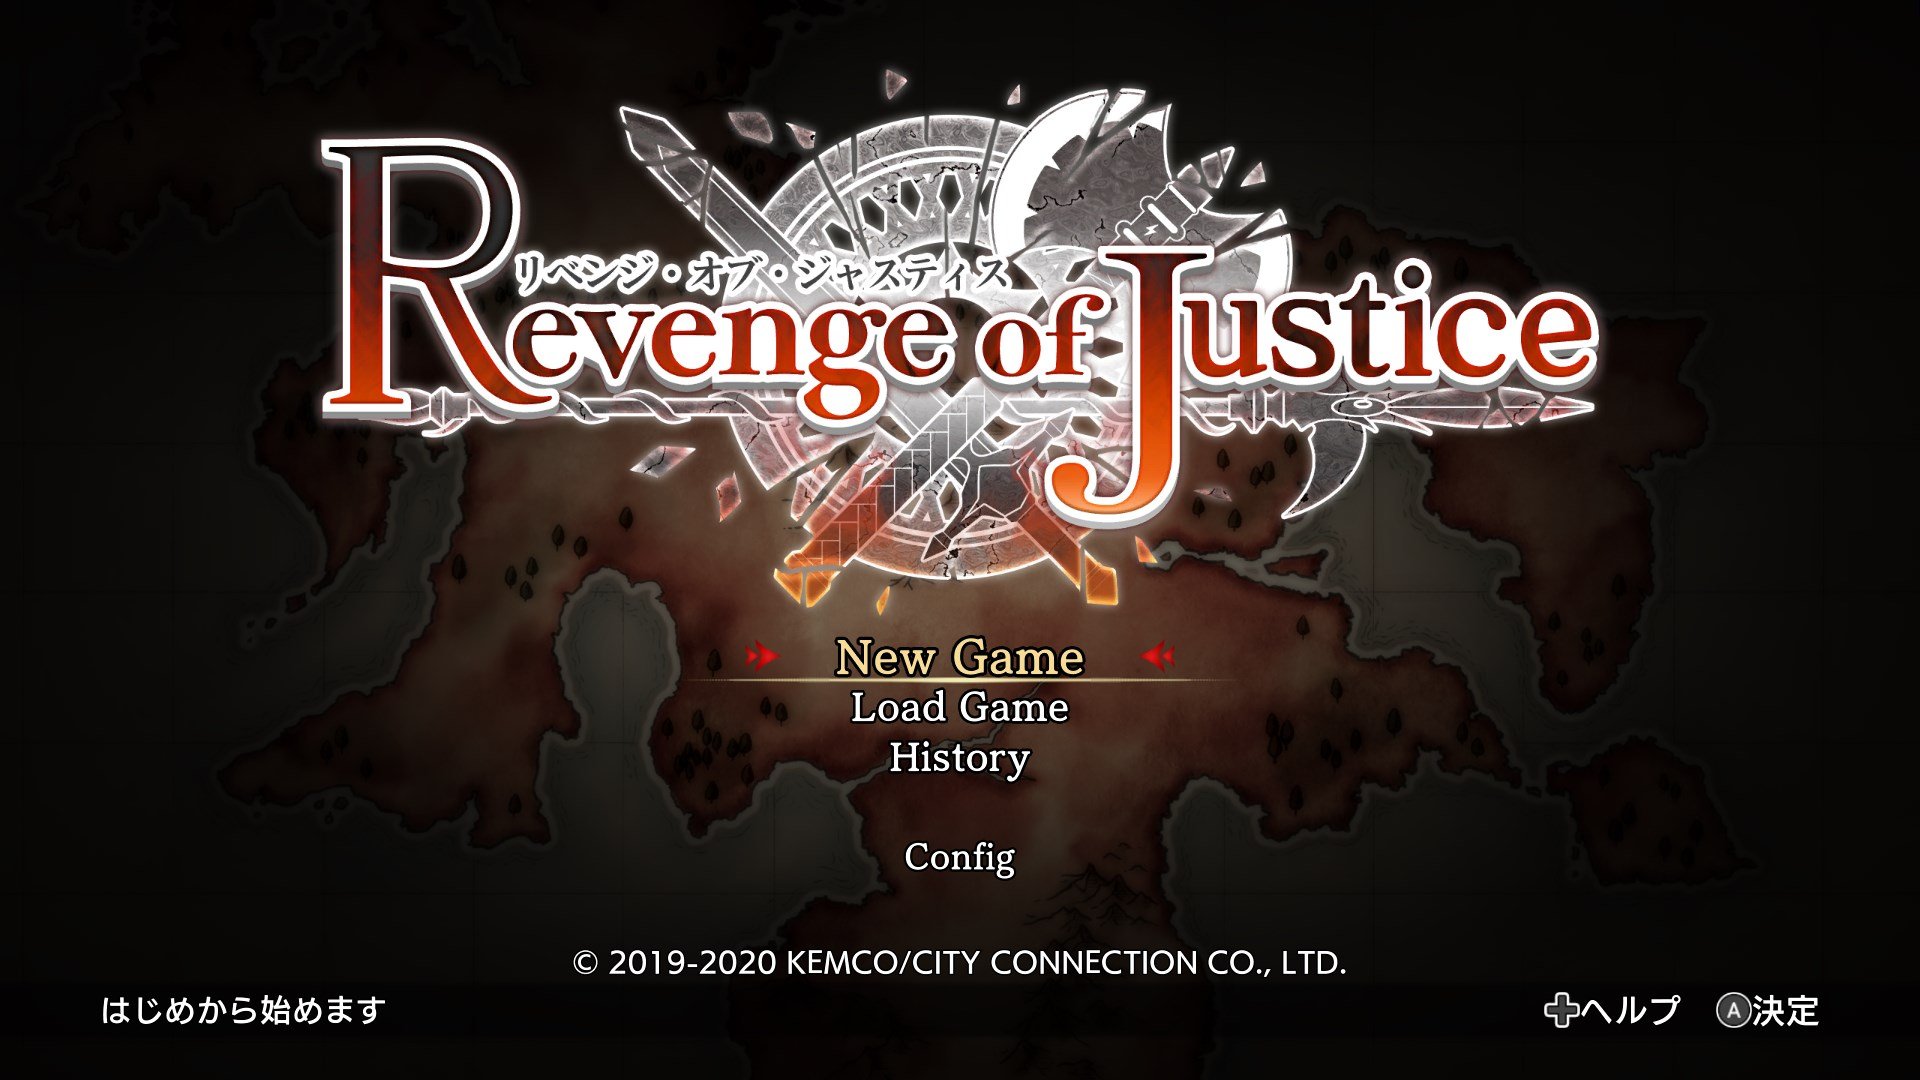 Revenge of Justice